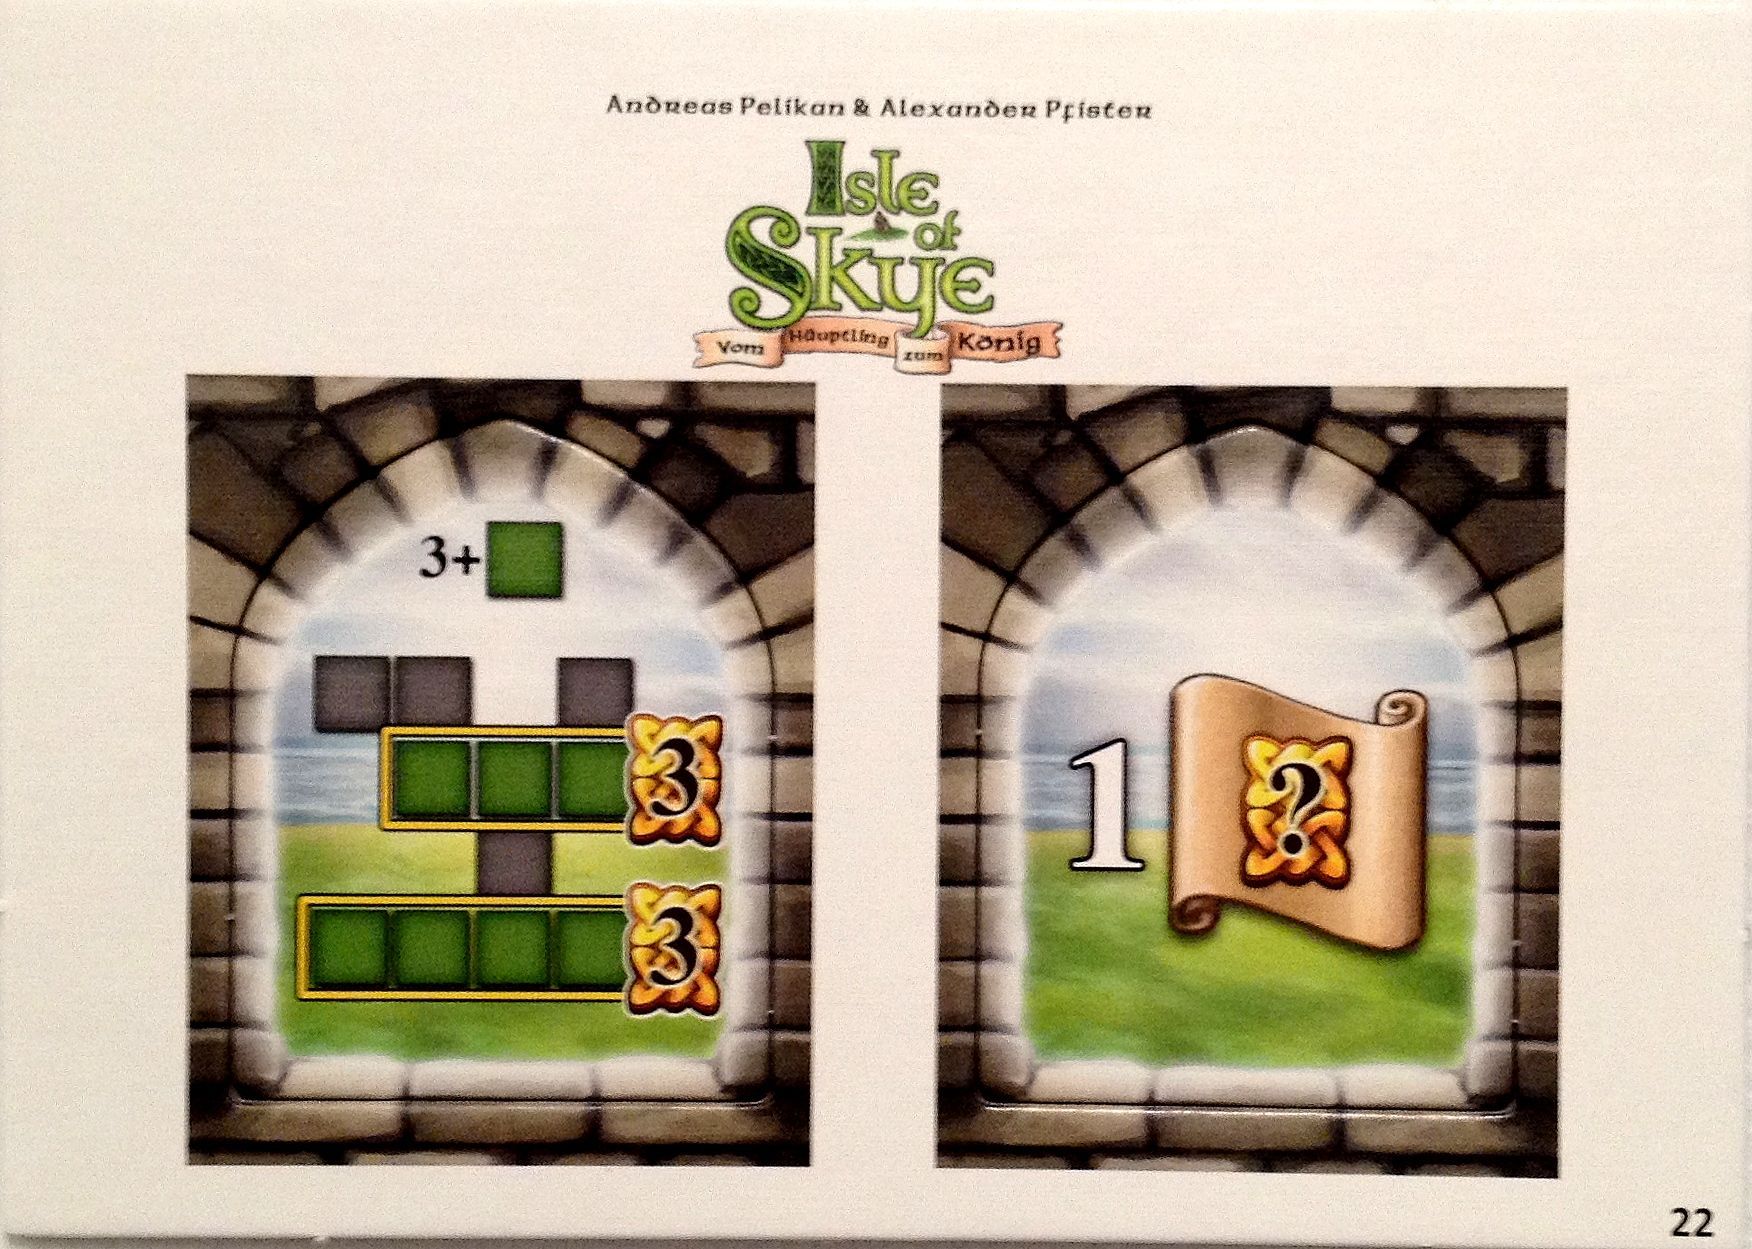 Isle of Skye: From Chieftain to King – Brettspiel Adventskalender Promo Tiles